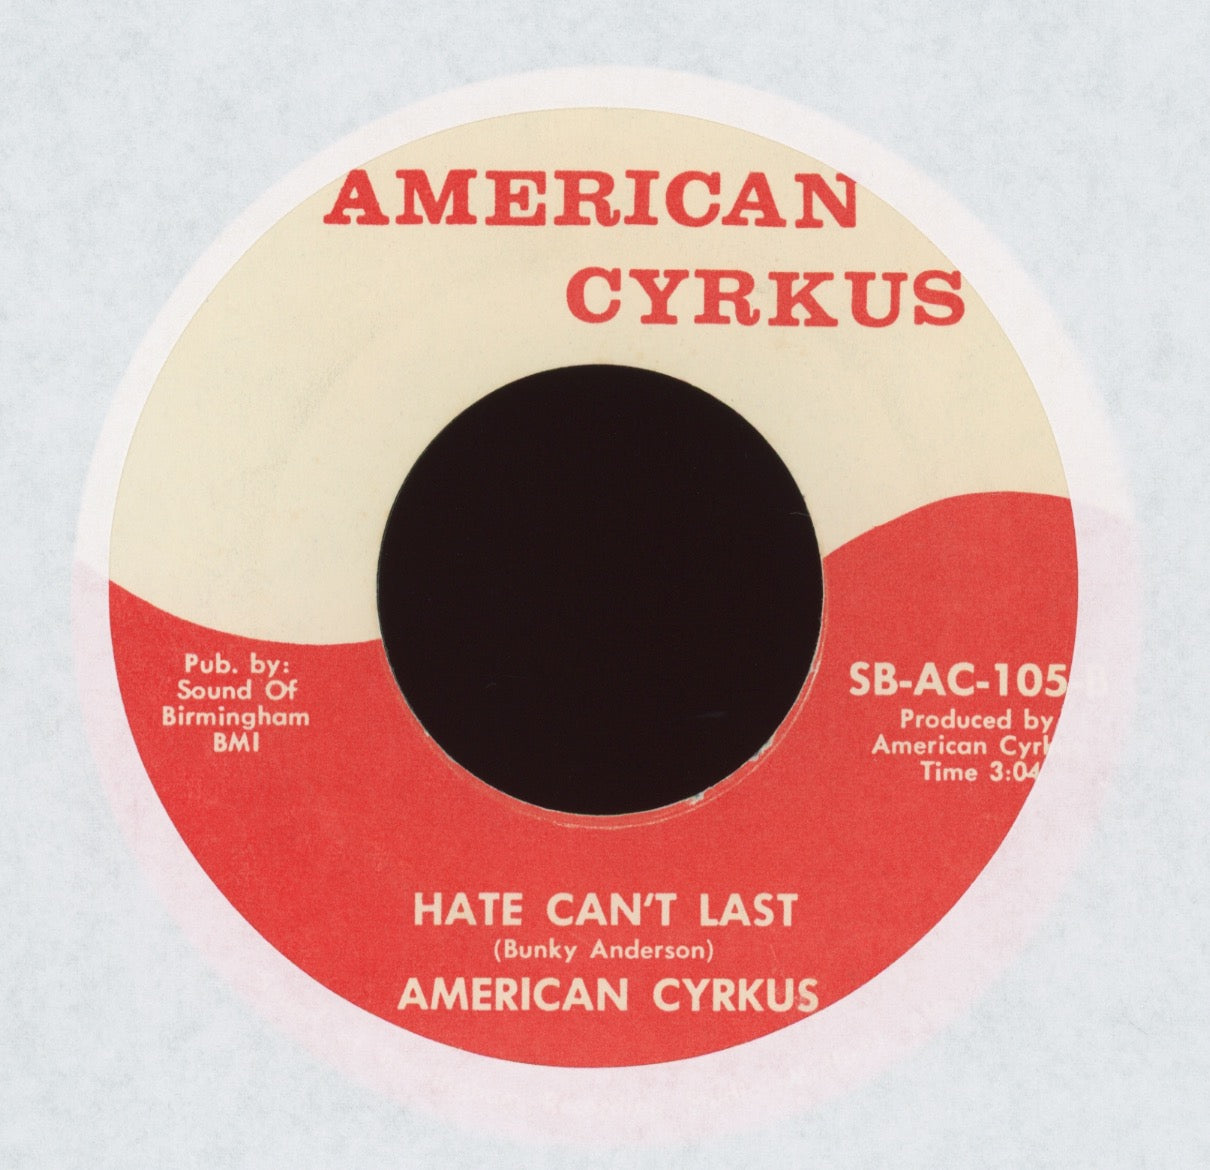 American Cyrkus - Hate Can't Last on American Cyrkus